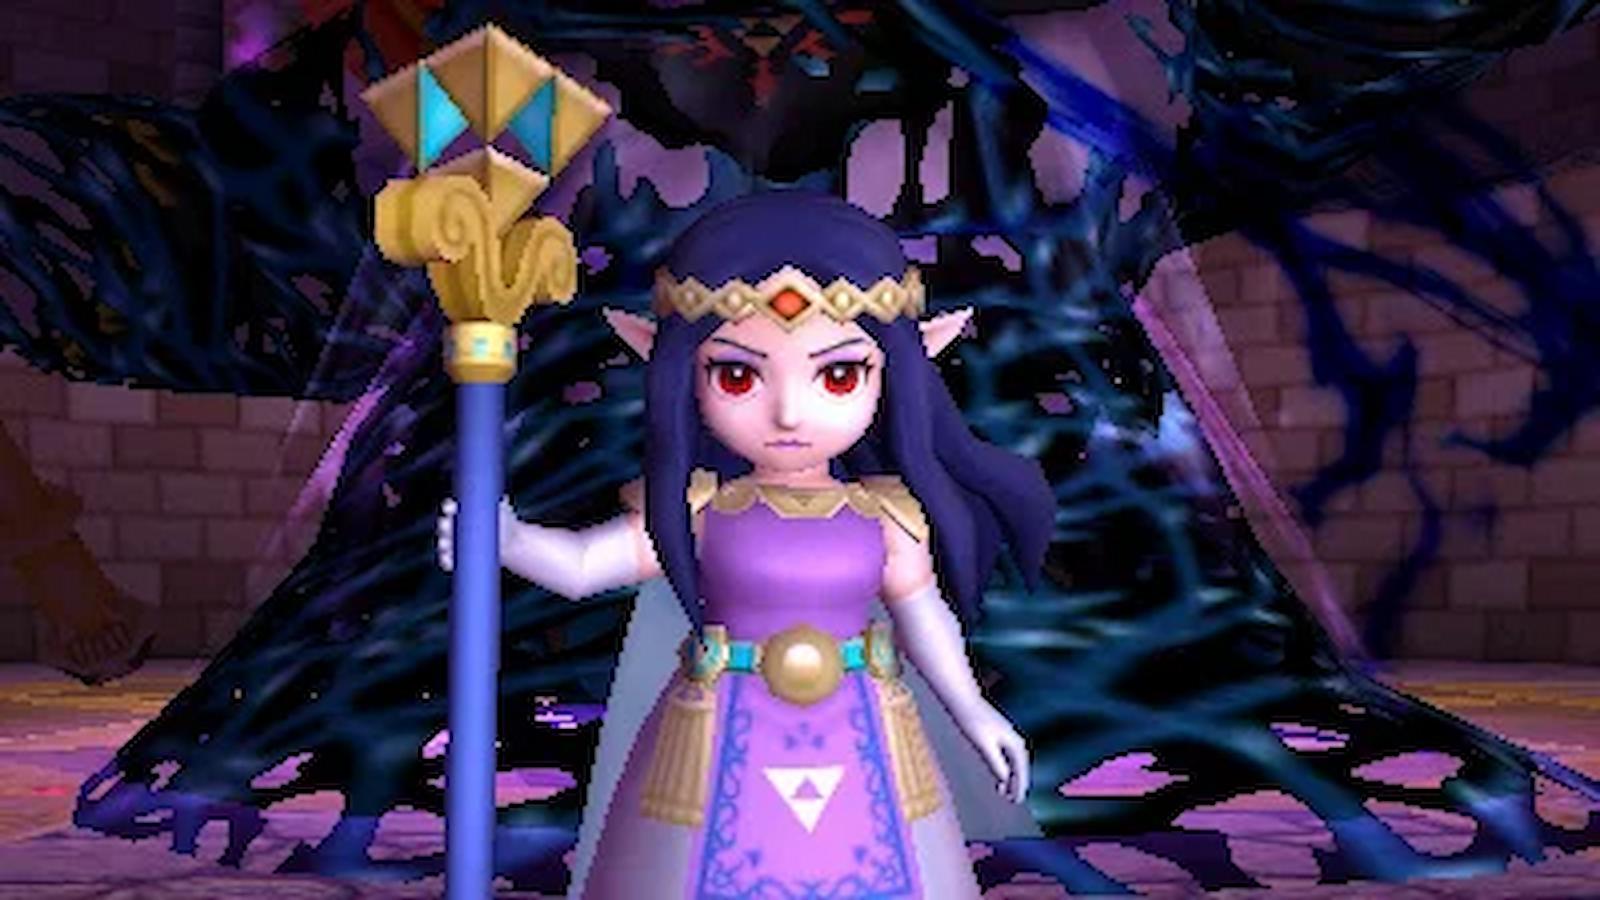 Princess Hilda from A Link Between Worlds